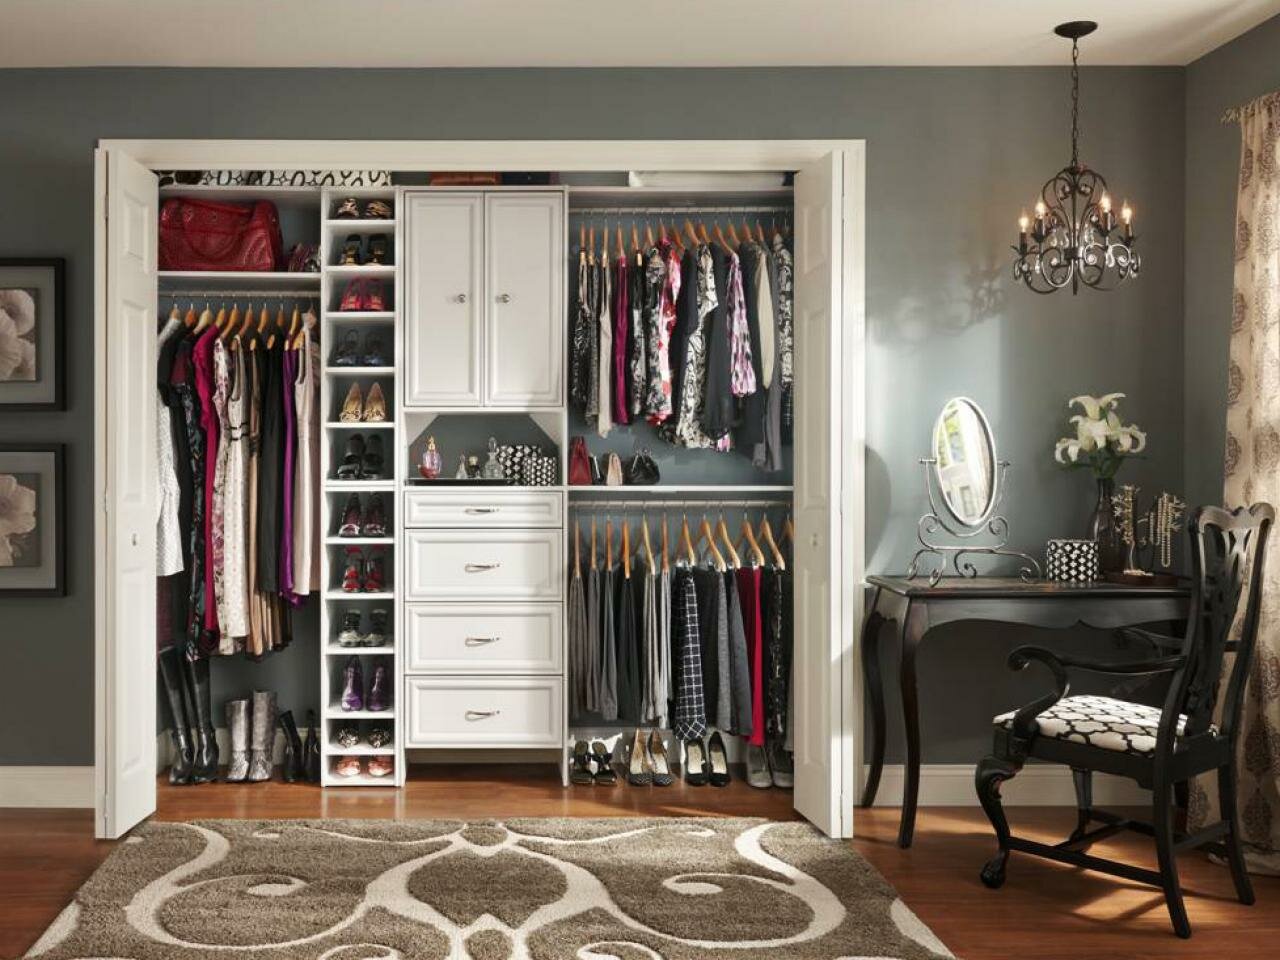 How to Make Your Own Closet Organizer | Diy Walk in Closet | Modular Closet Systems